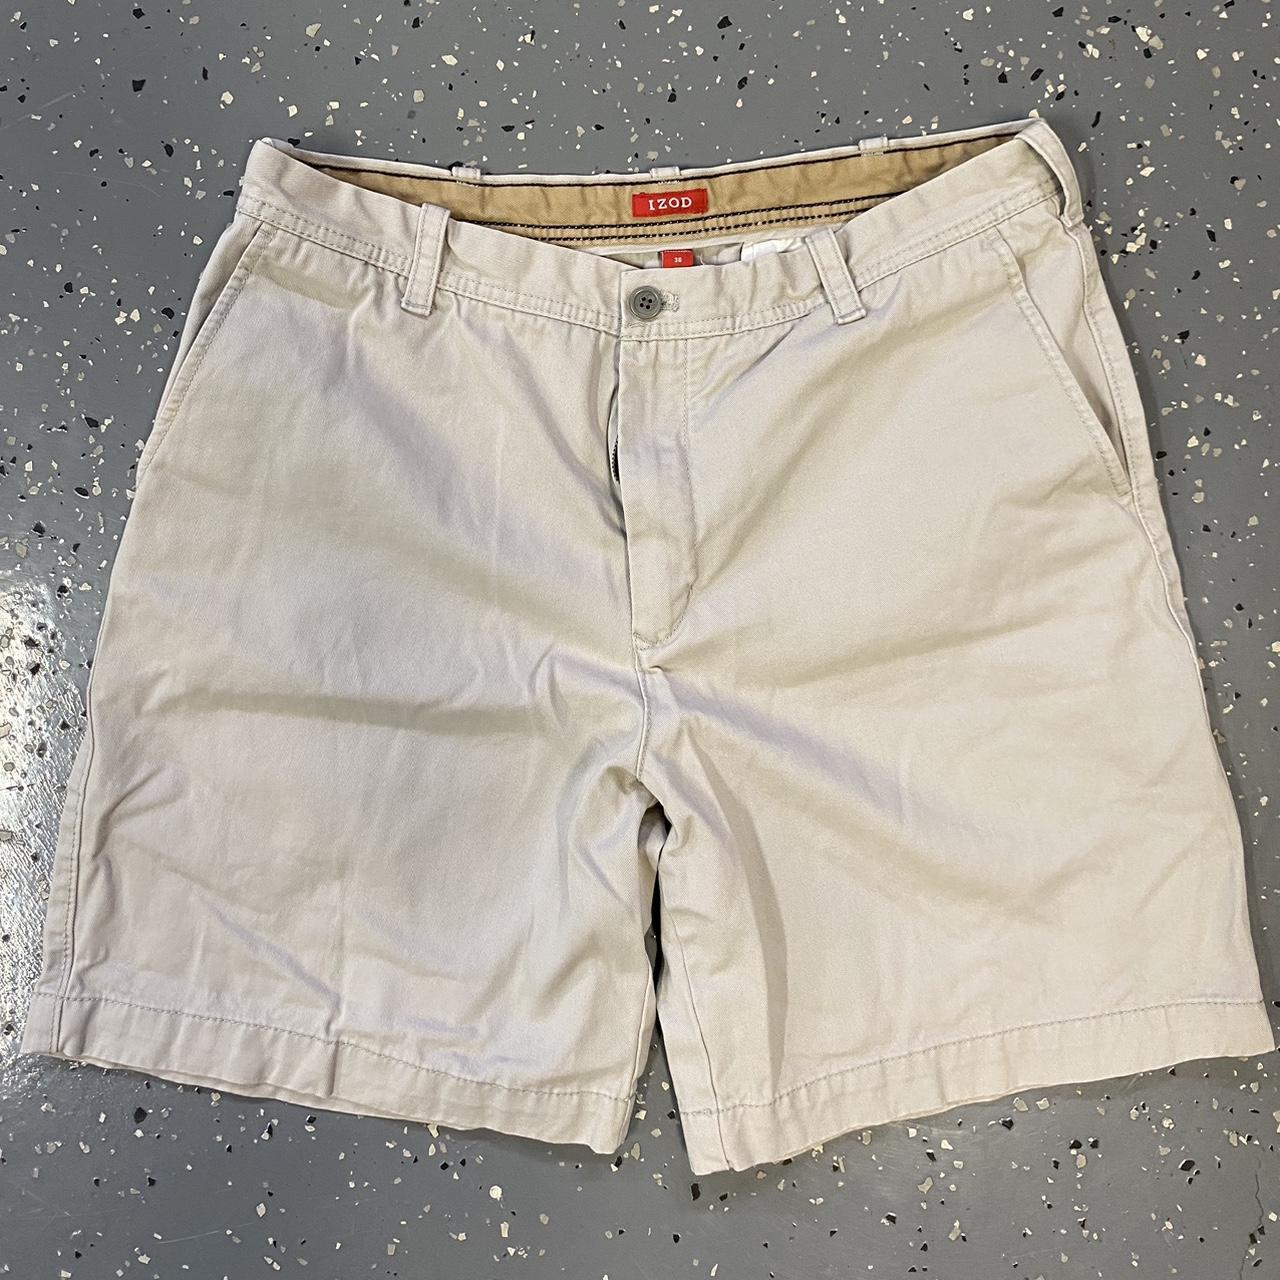 Men’s light khaki shorts - Depop